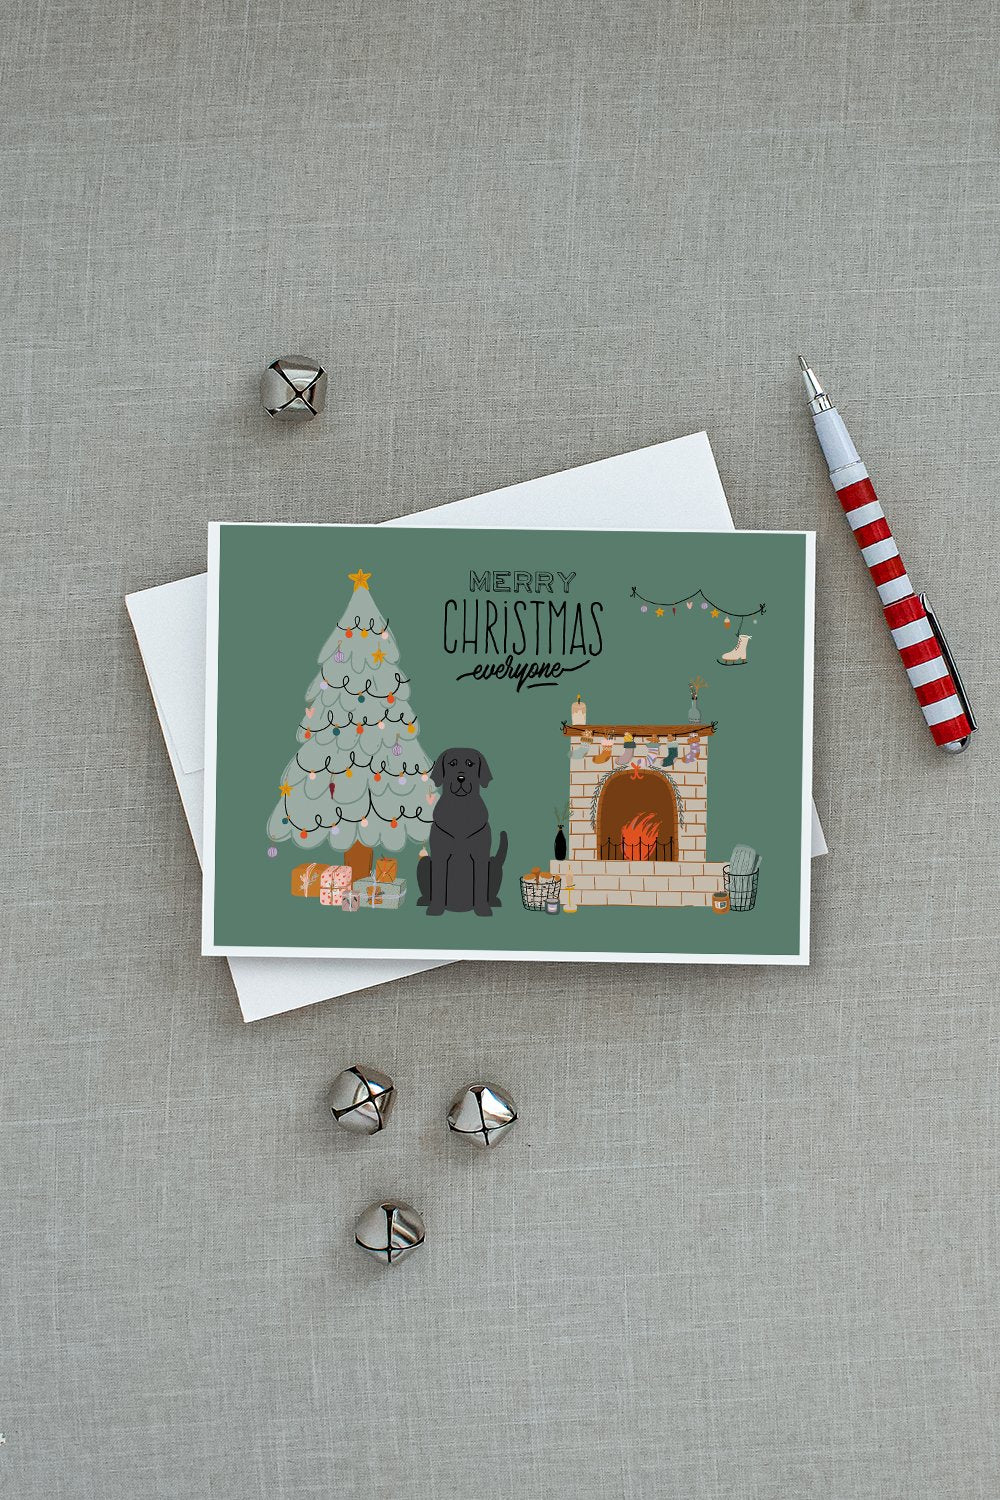 Black Labrador Christmas Everyone Greeting Cards and Envelopes Pack of 8 - the-store.com